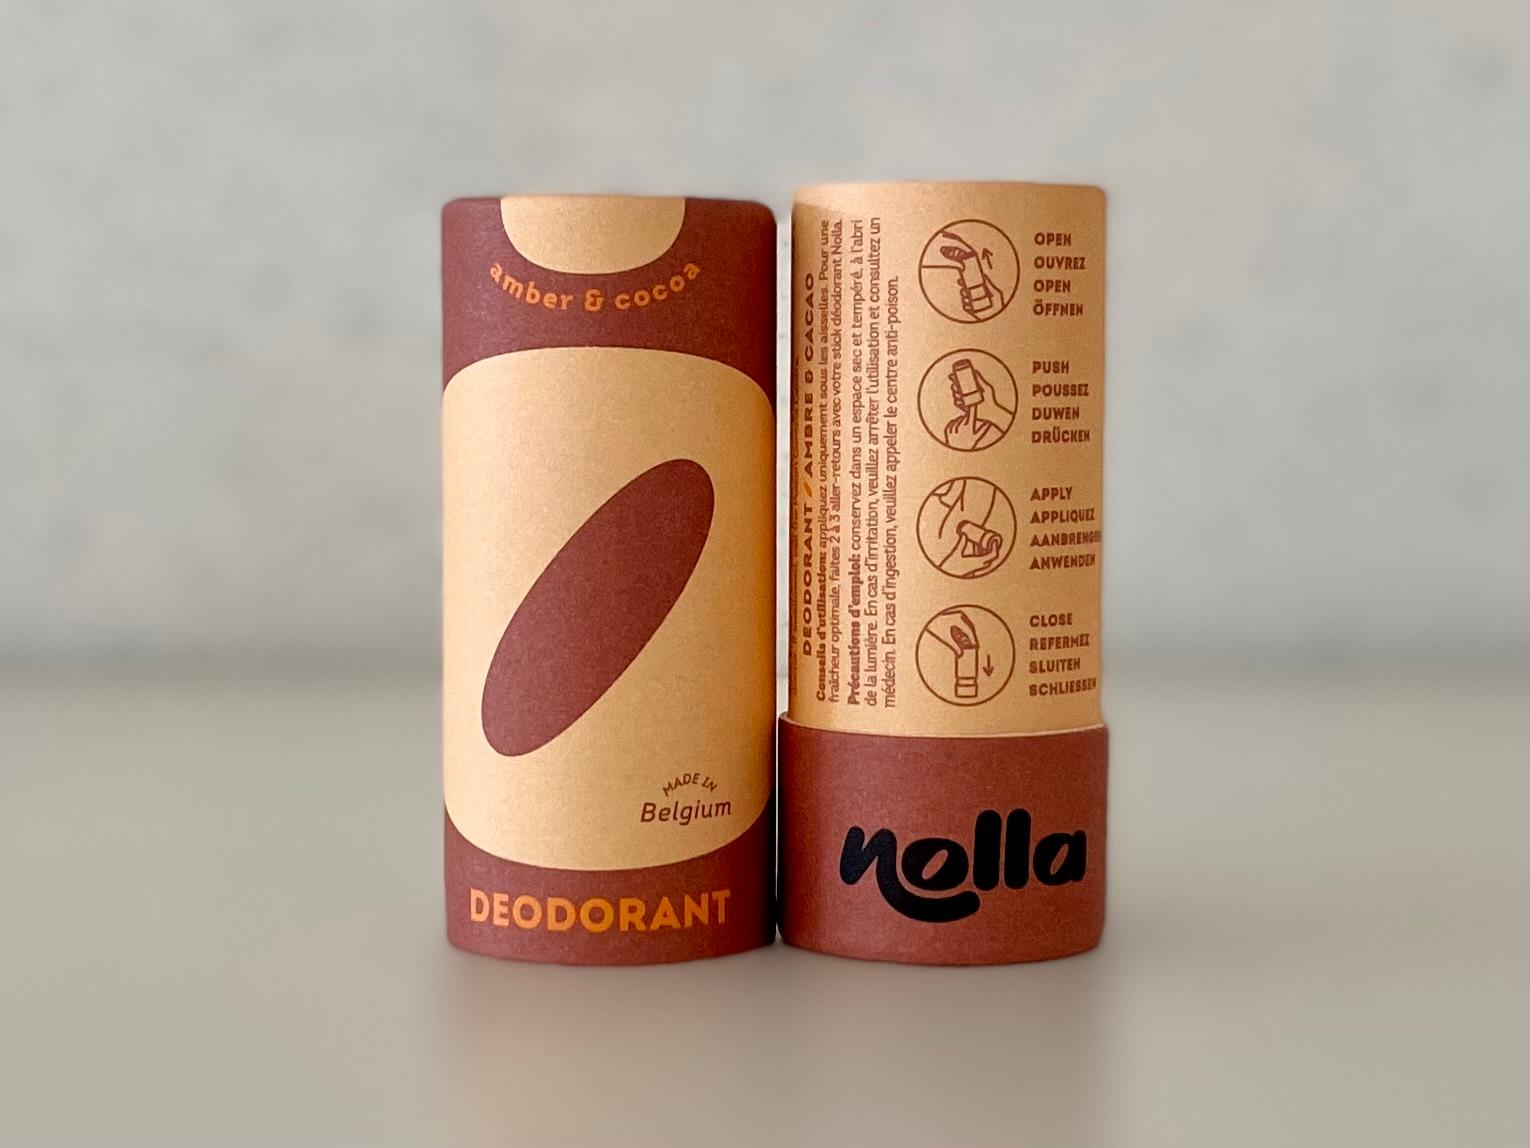 Déodorant - amber & cocoa